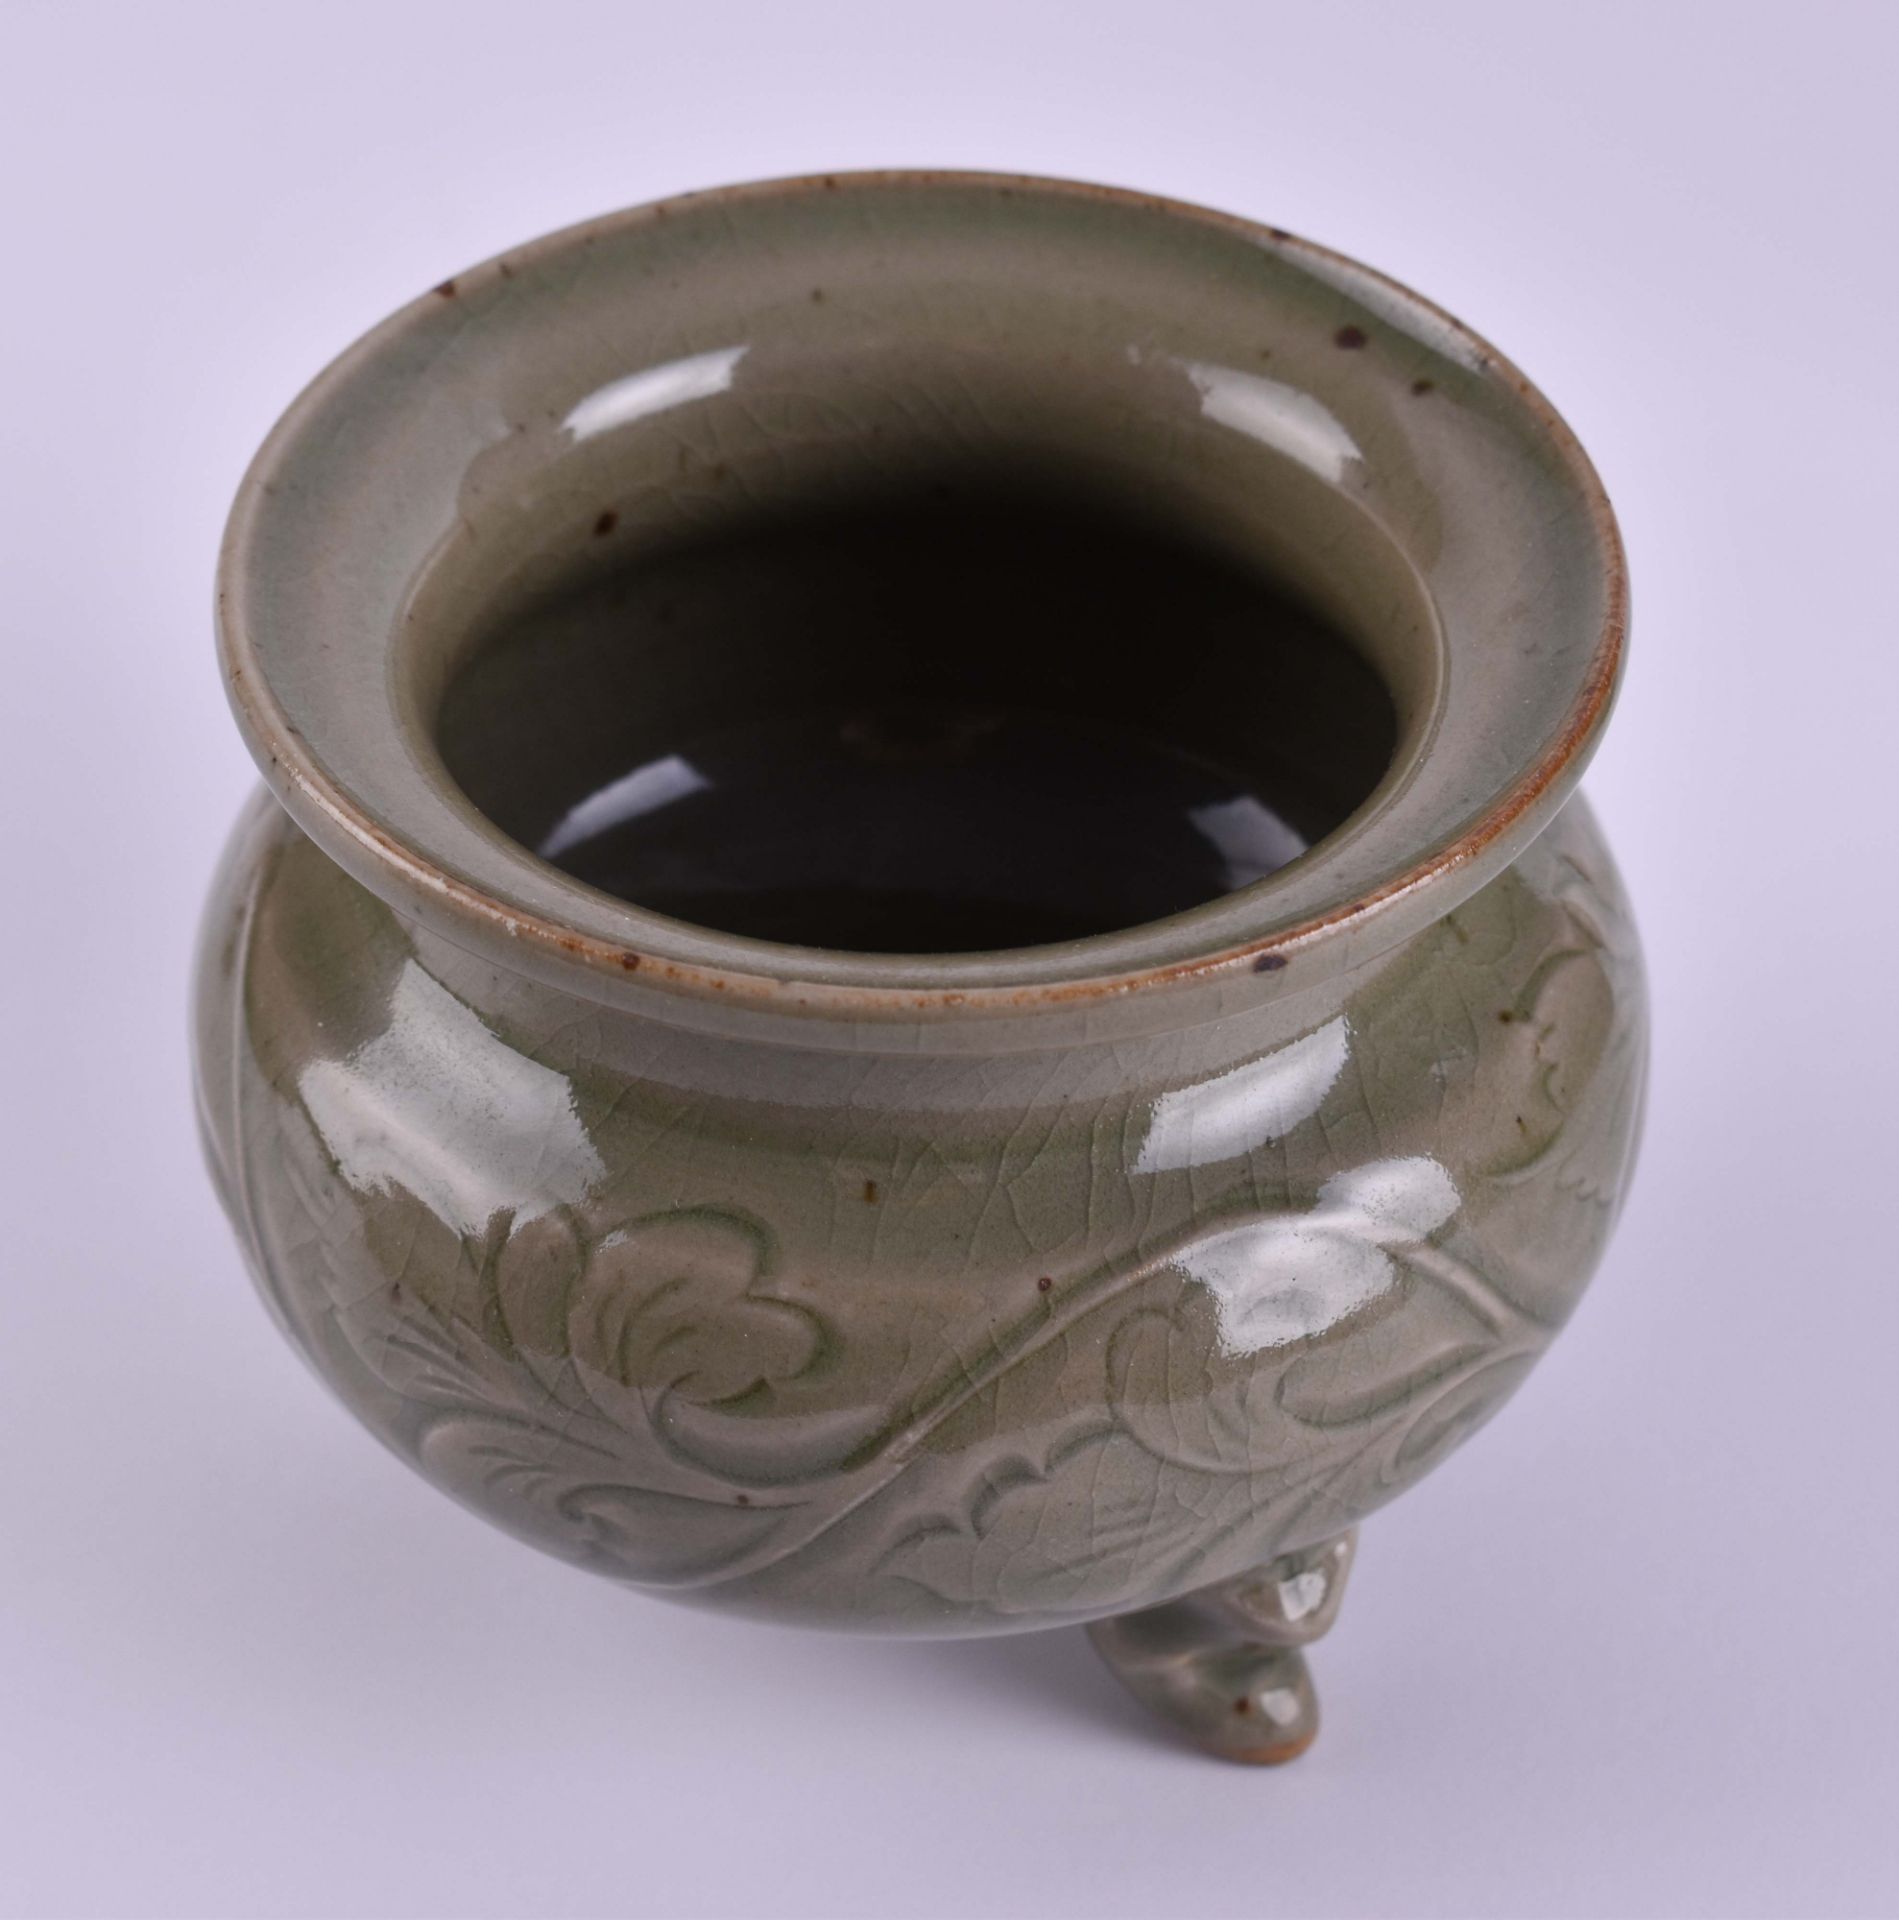  Incense burner China Ming period - Image 4 of 5